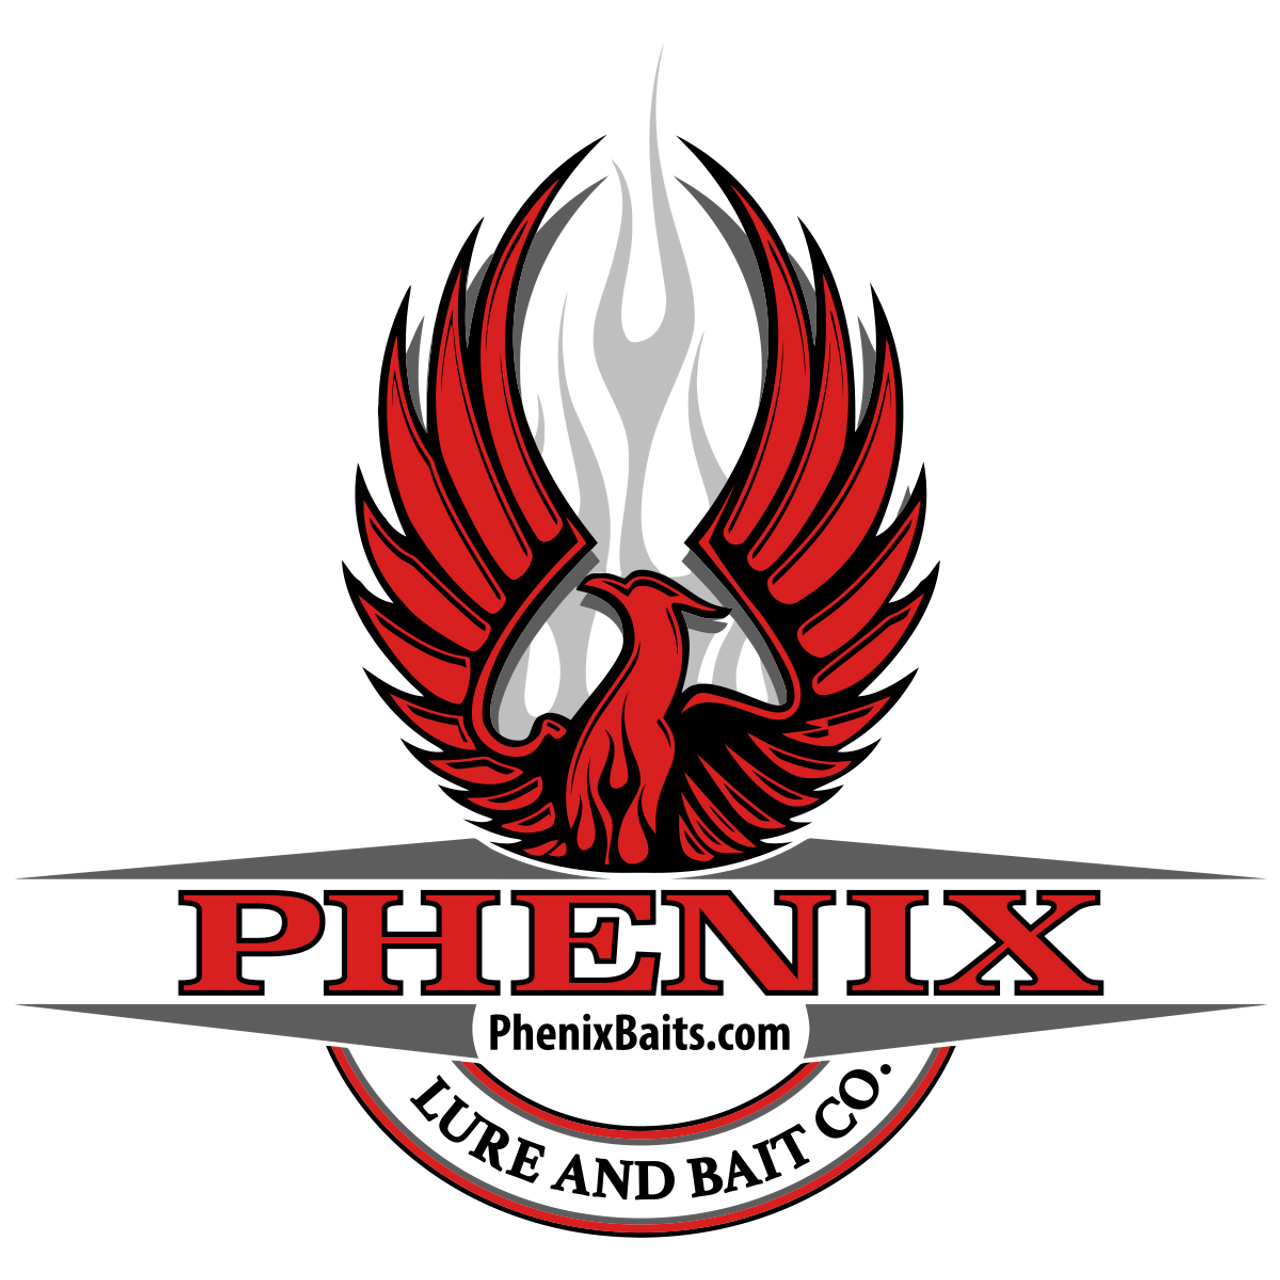 Phenix Pro-Series Spinnerbait - White Flash with Double Willow White Blades